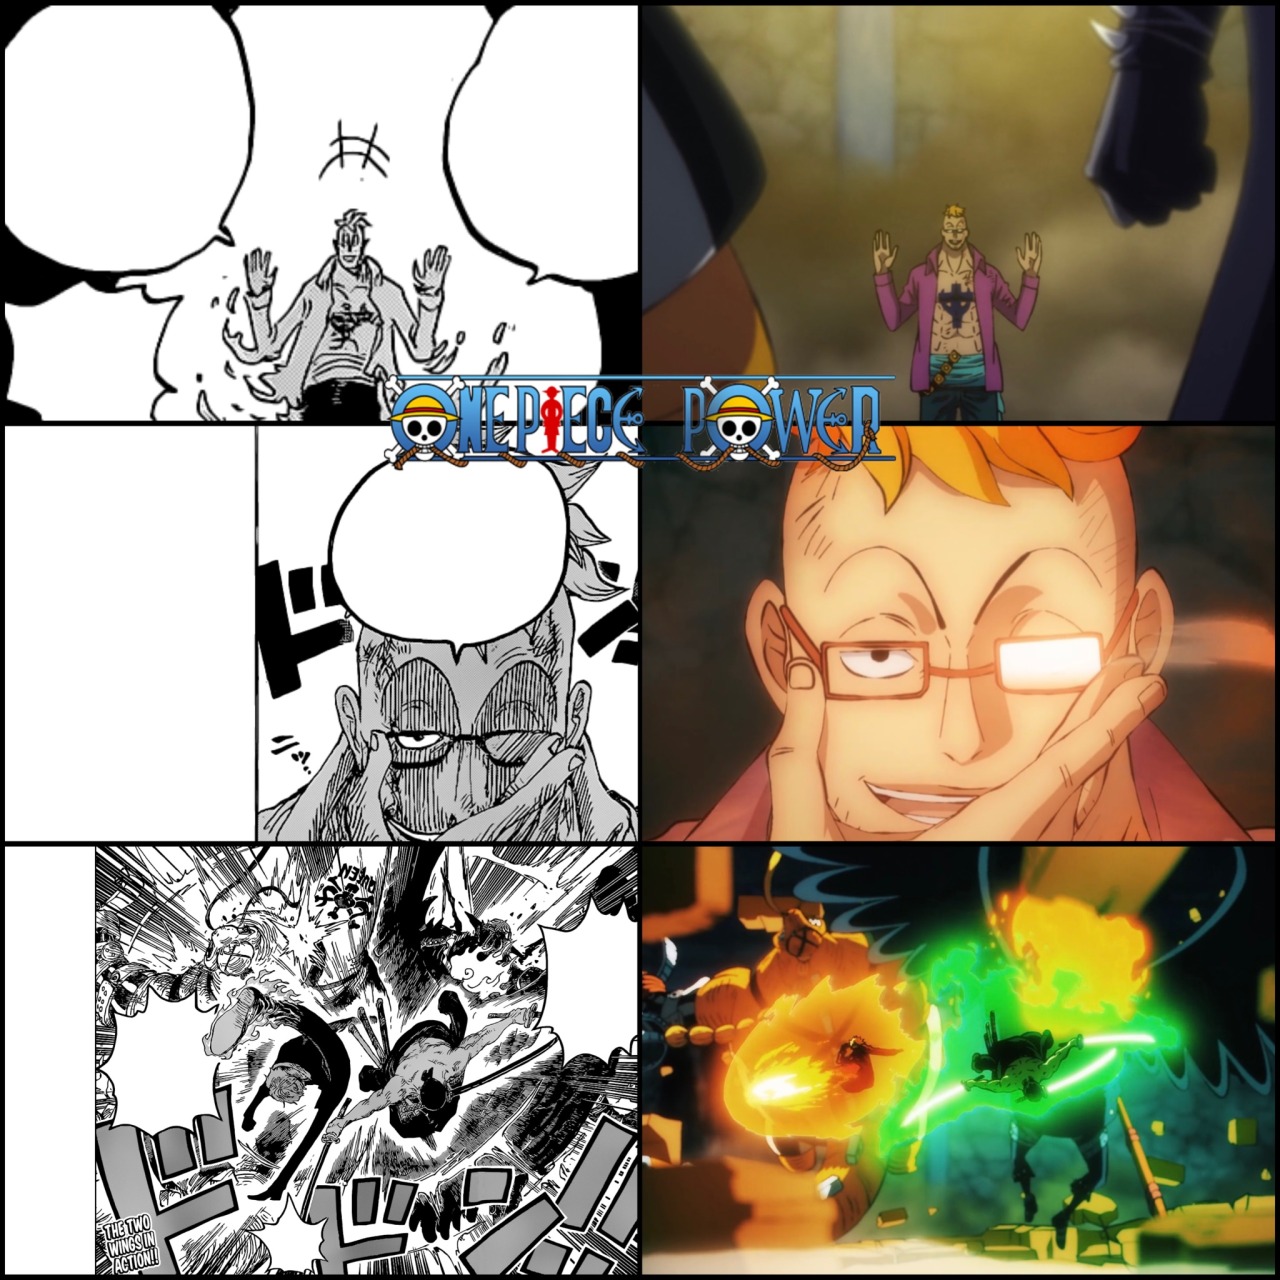 One Piece Episode 1022 recap: Hyogoro transforms, Marco fights